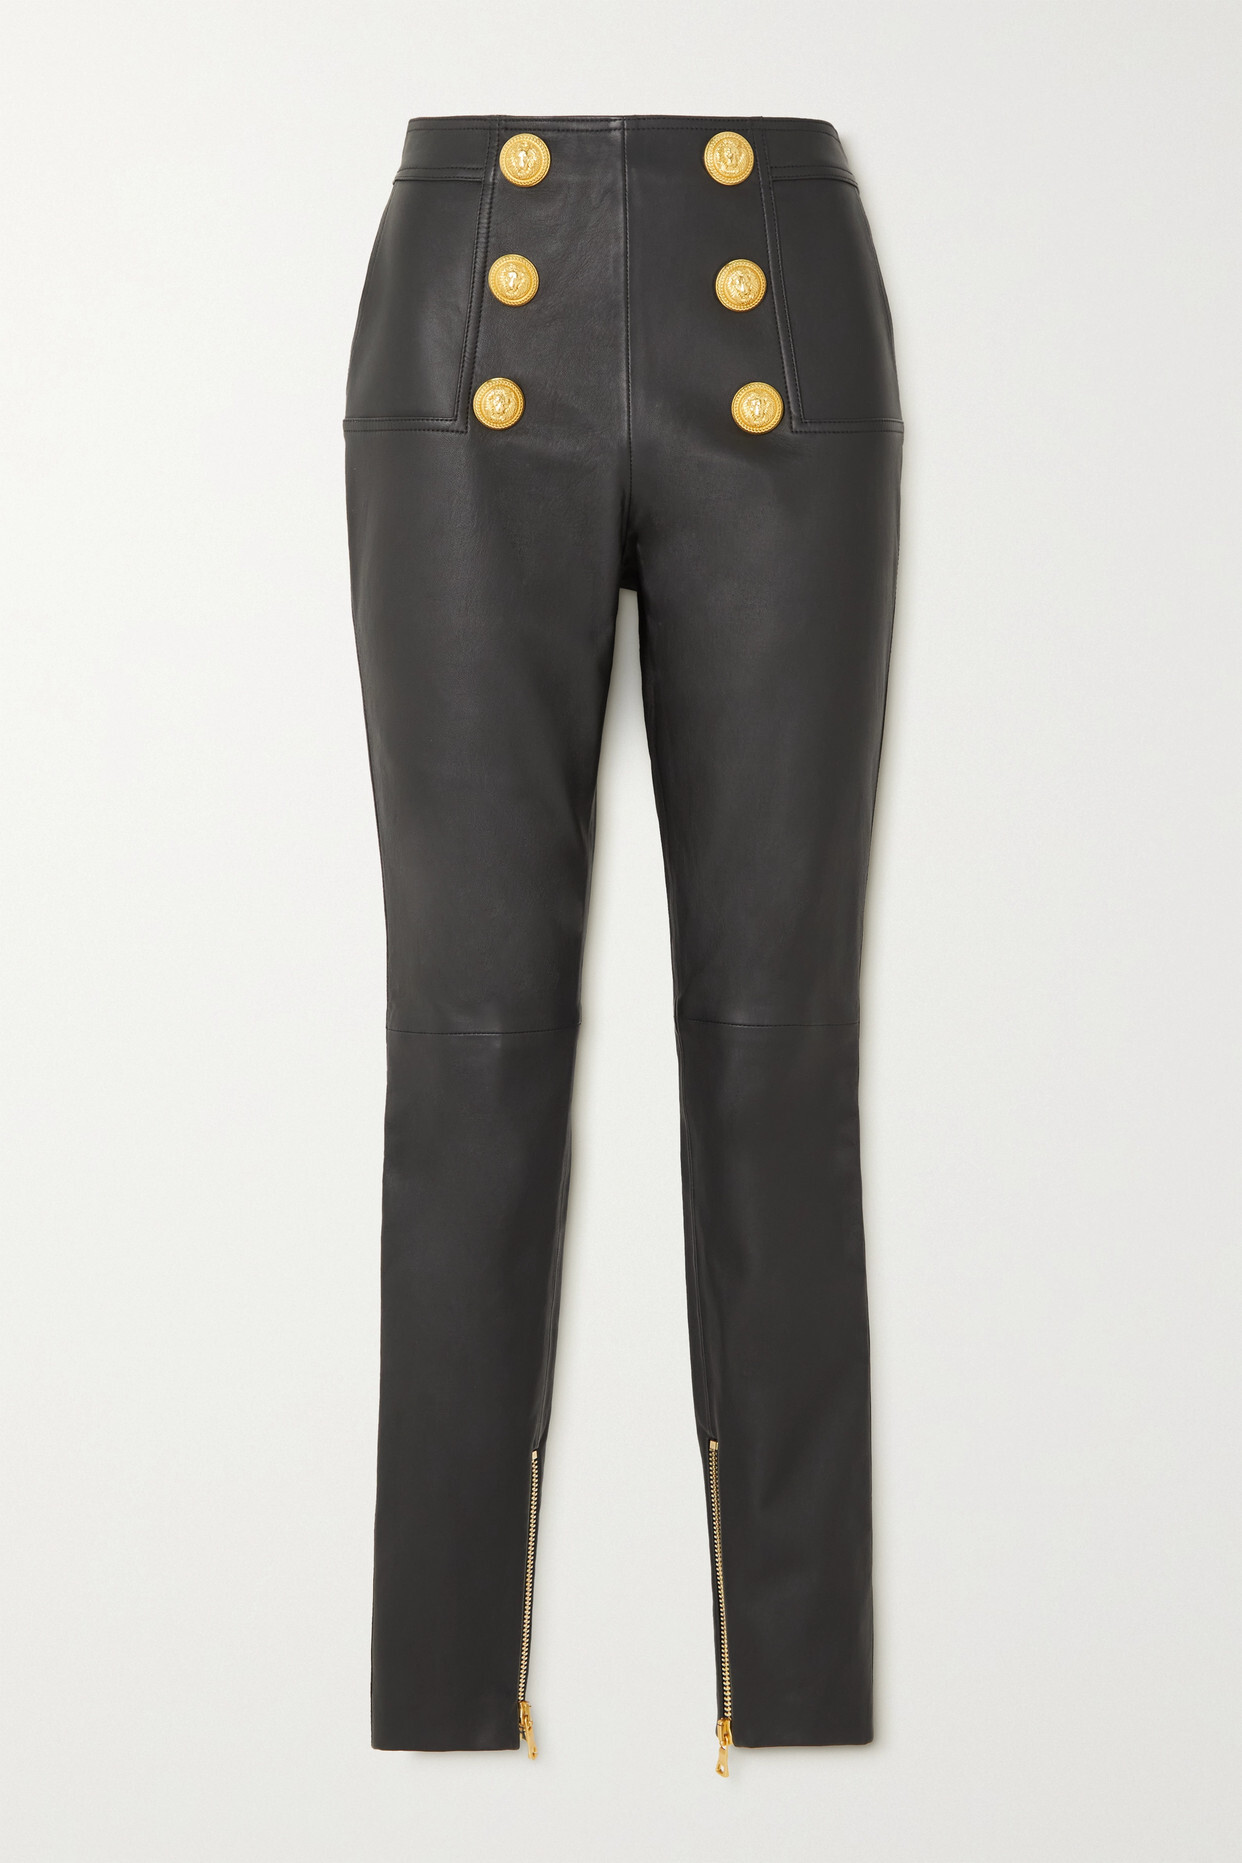 Balmain - Button-embellished Leather Leggings - Black